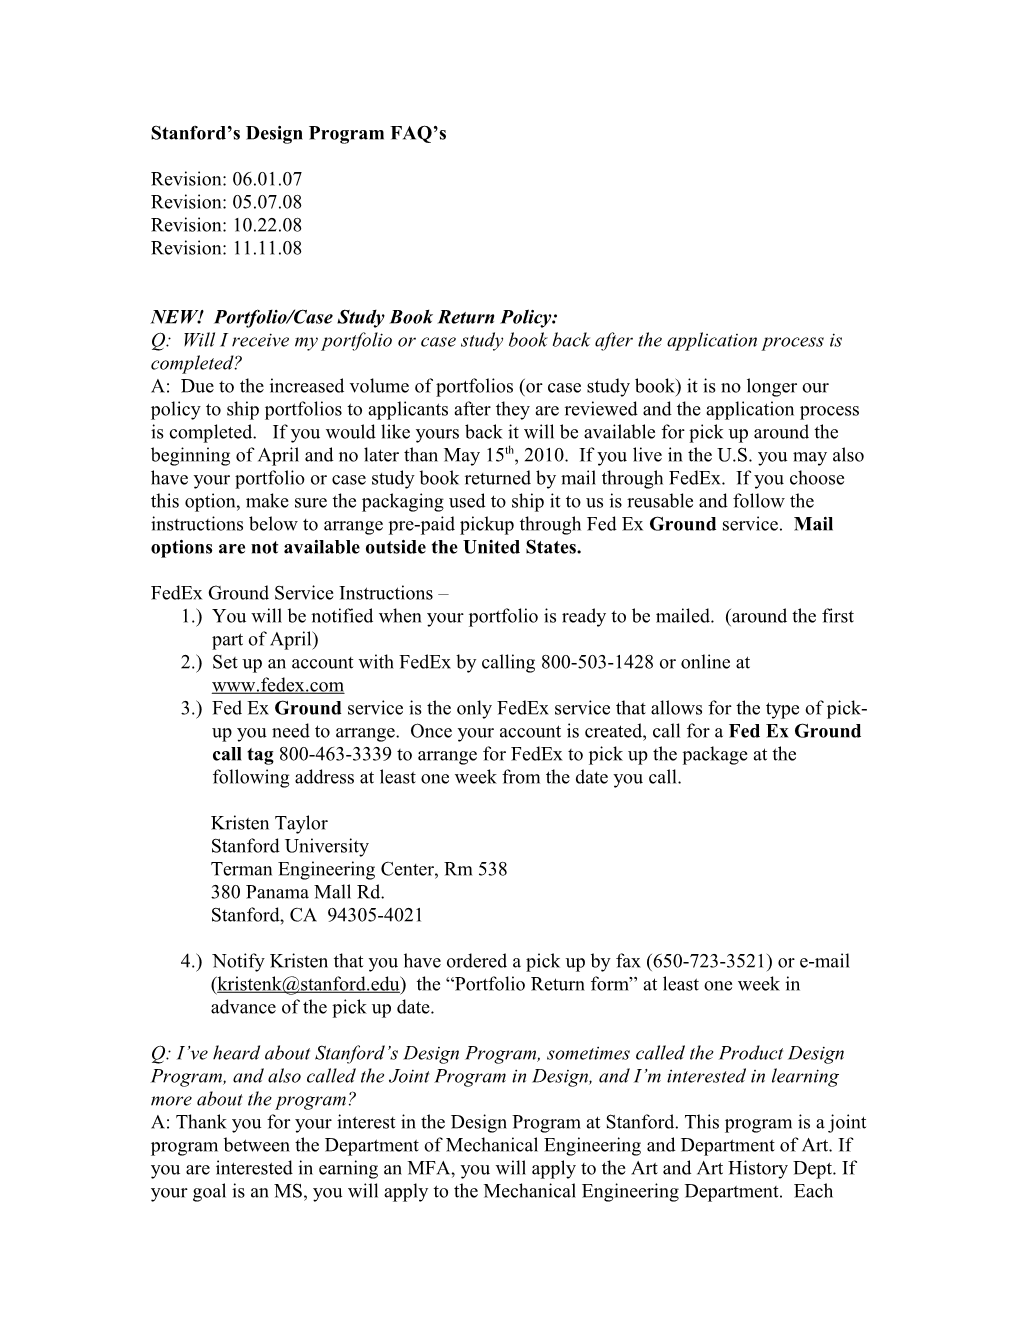 NEW! Portfolio/Case Study Book Return Policy